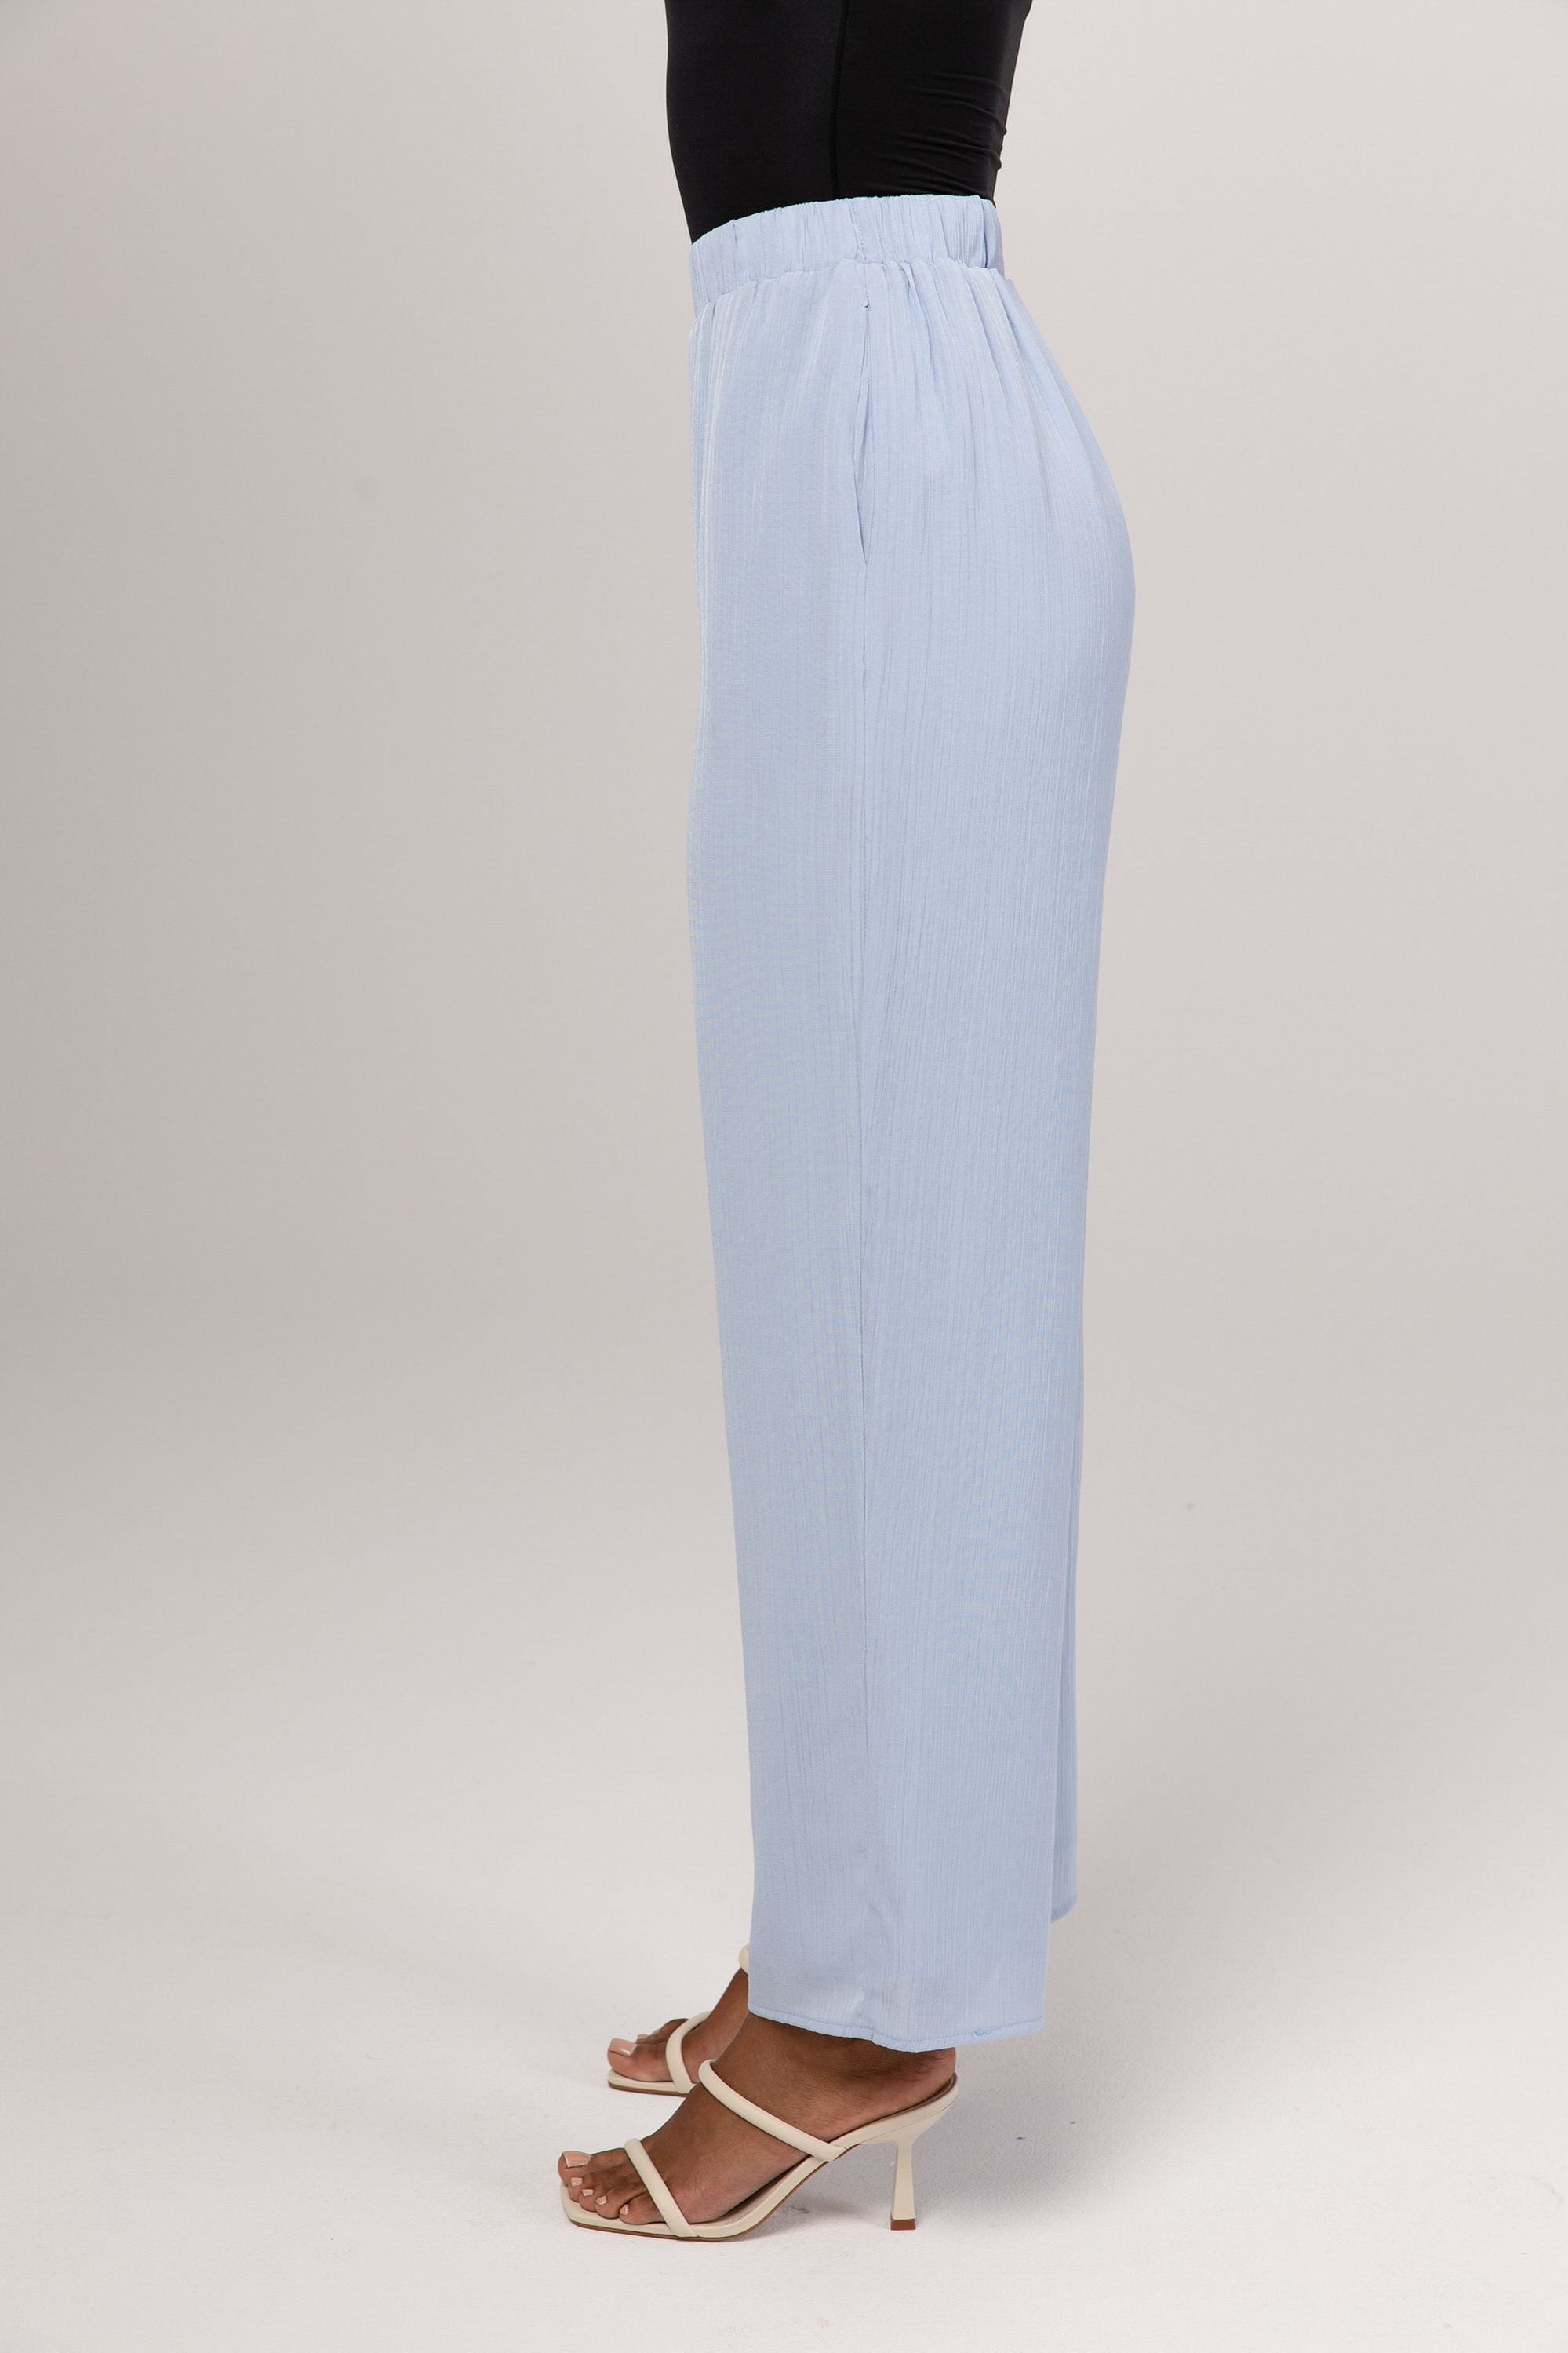 Nashwa Textured Rayon Wide Leg Pants - Powder Blue Veiled 